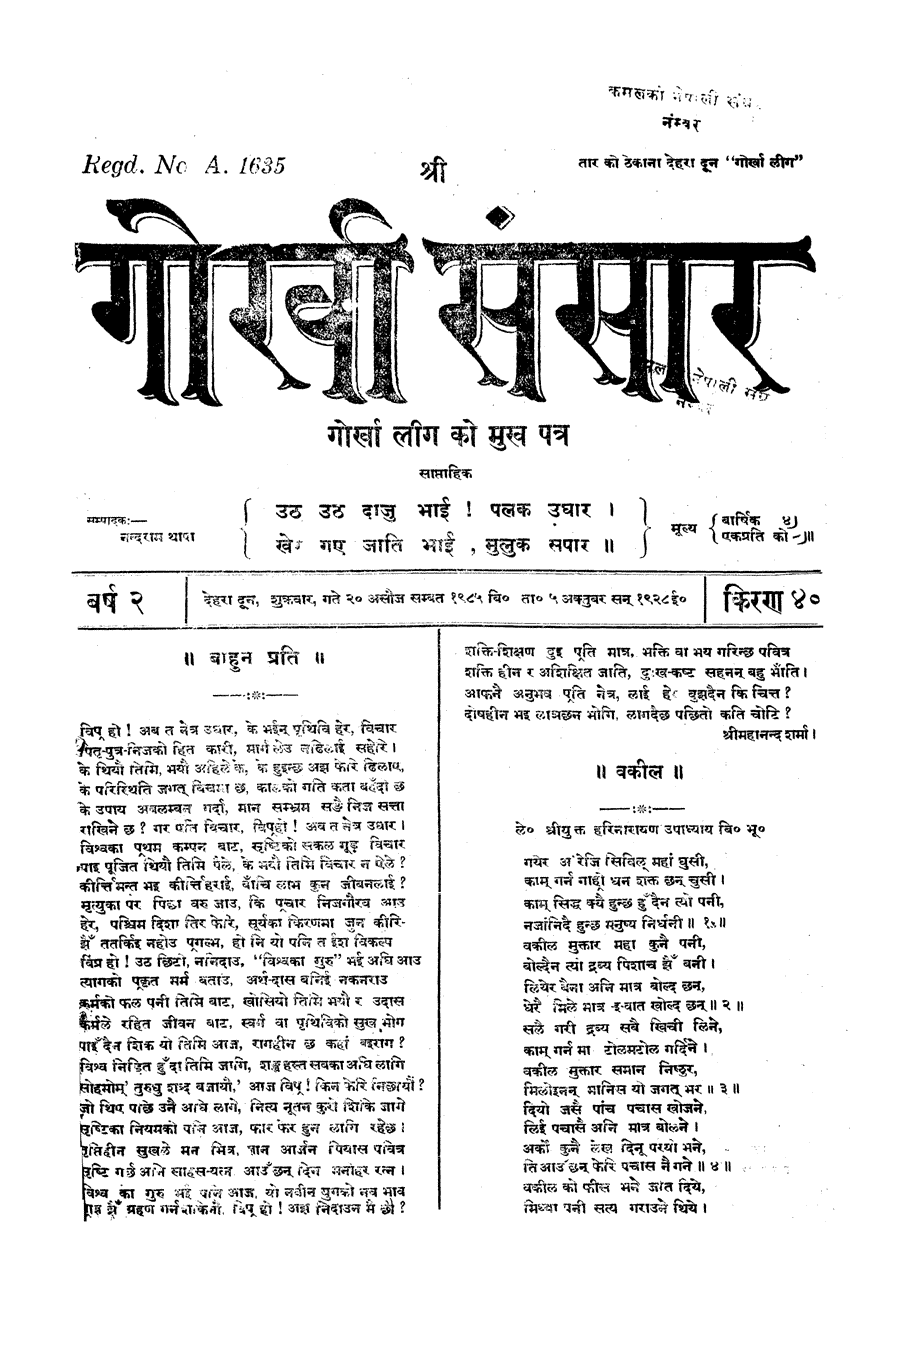 Gorkha Sansar, 5 Oct 1928, page 1